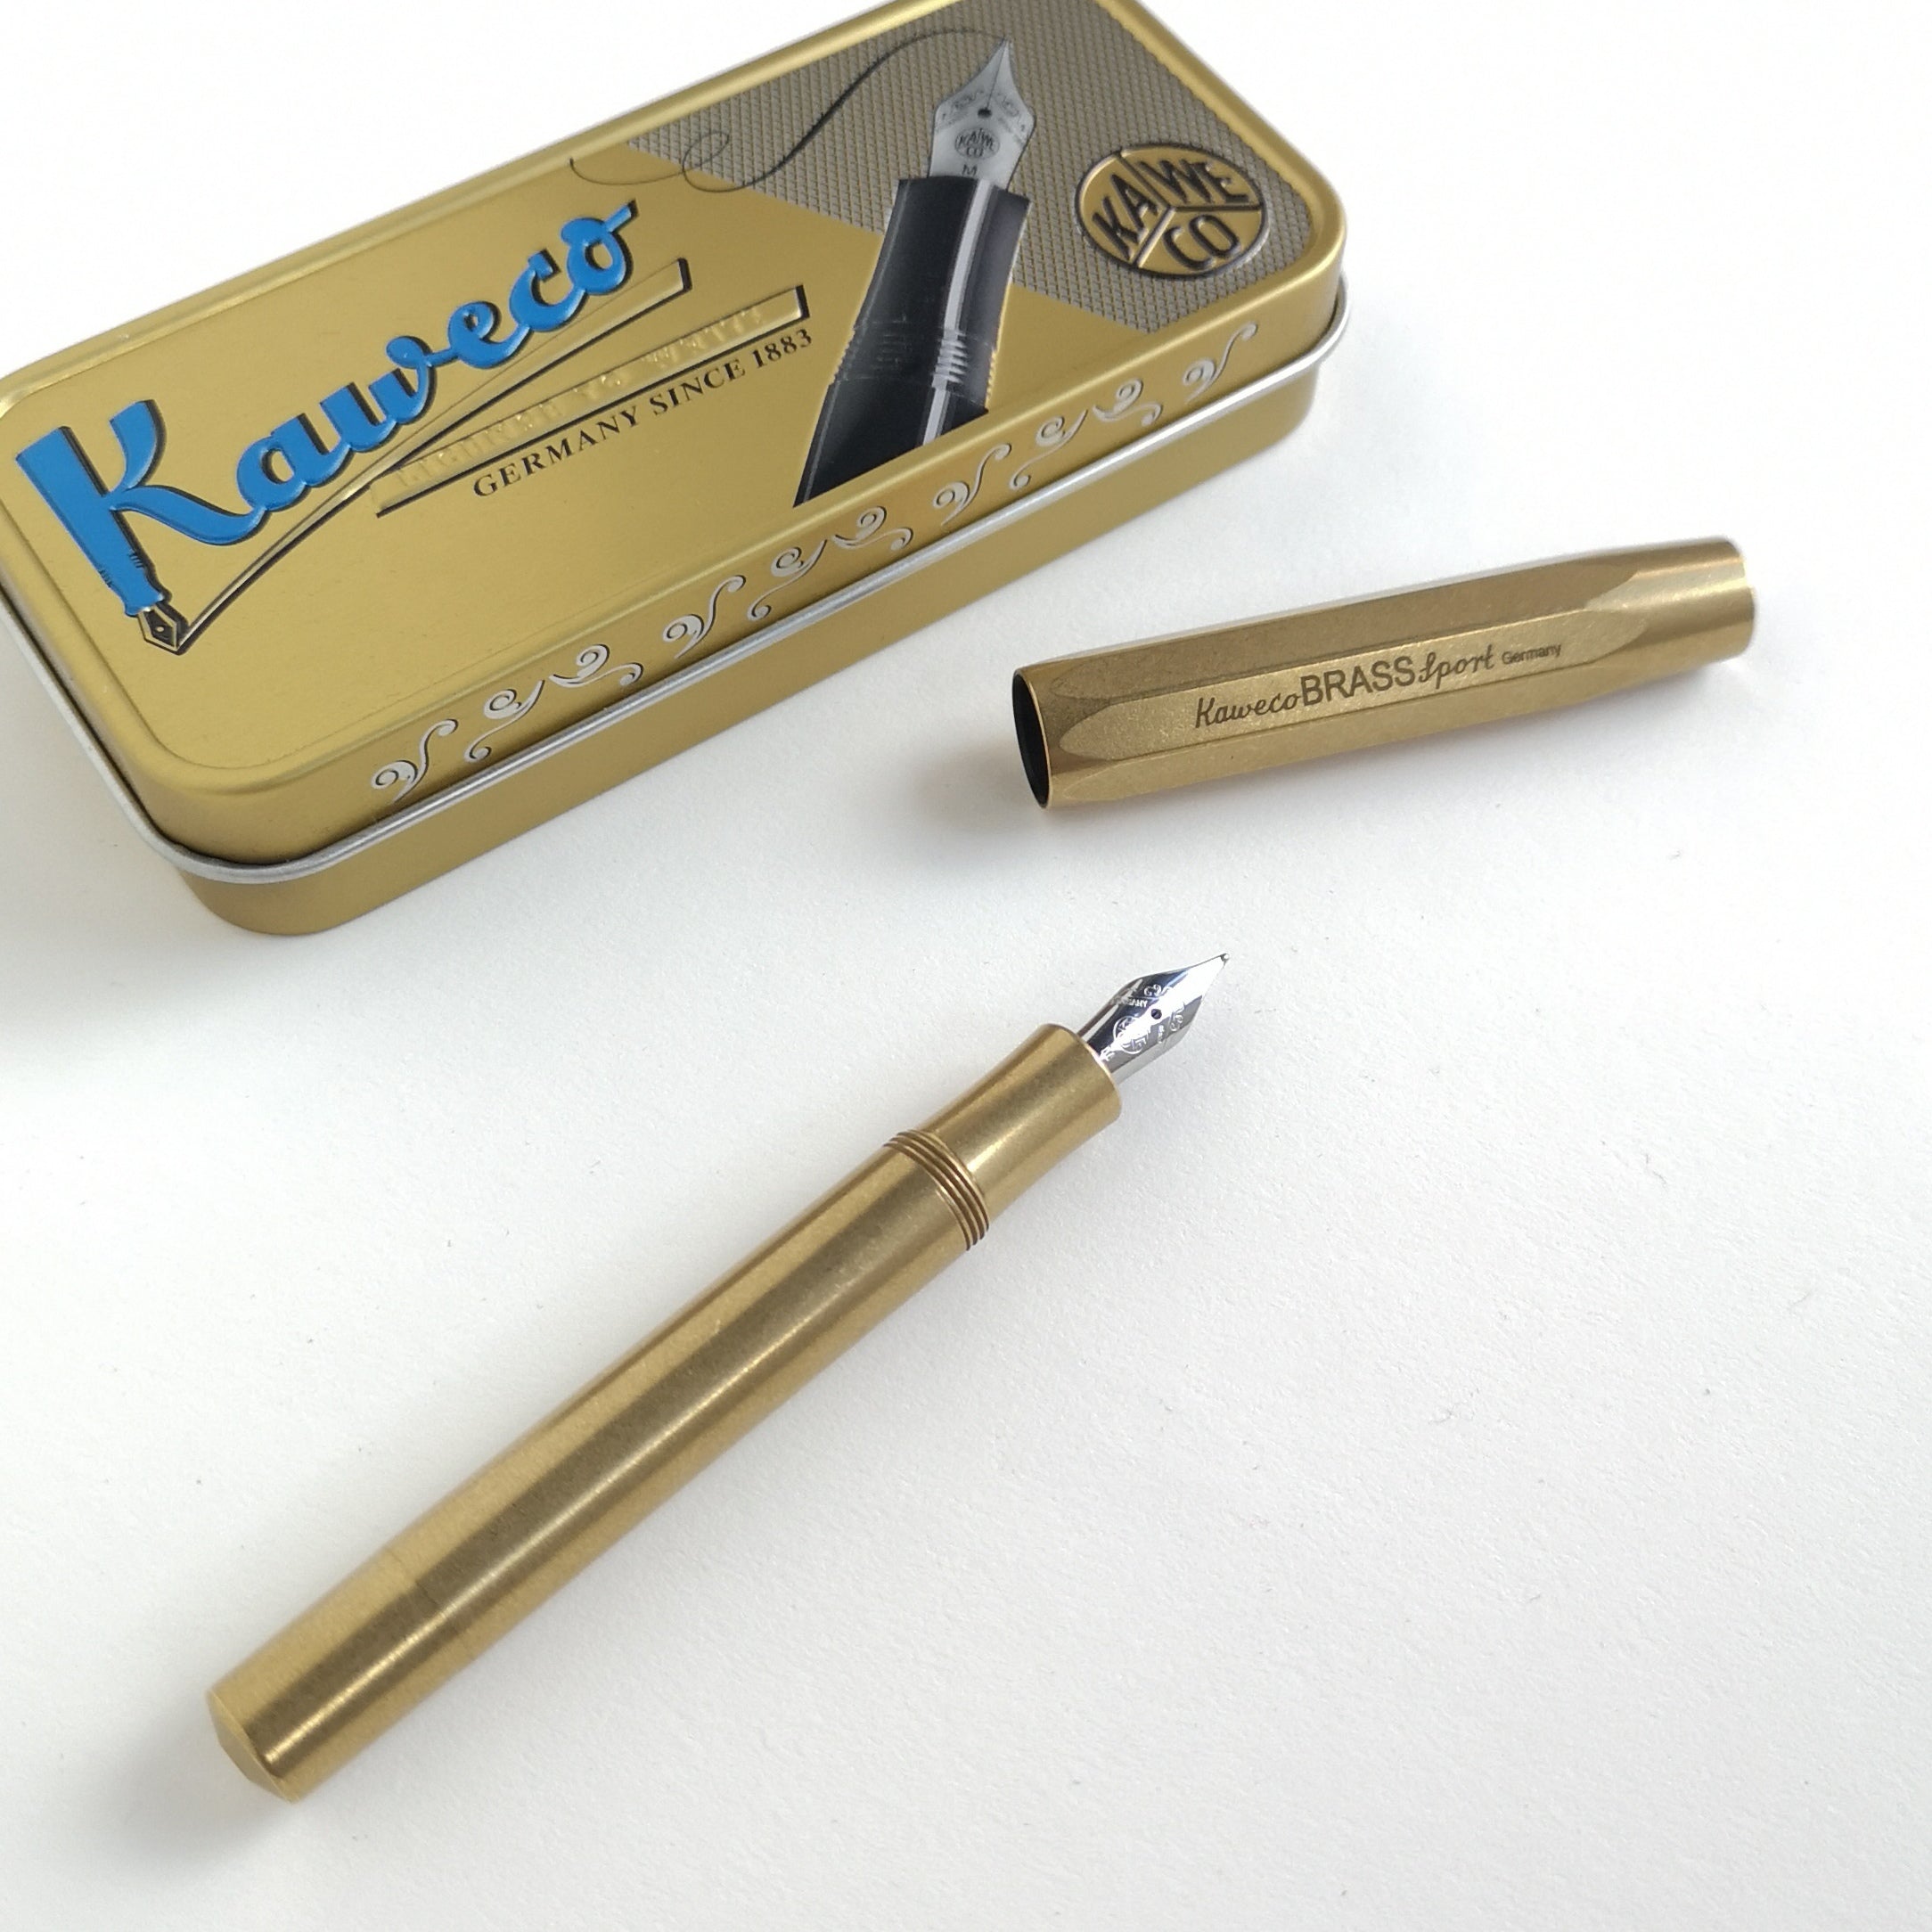 Kaweco Sport Brass Fountain Pen with metal display tin